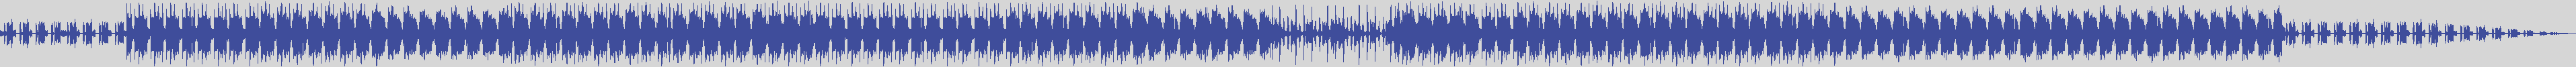 noclouds_chillout [NOC063] Isaac Mayers - Factory [Baston Liegi Chillout Mix] audio wave form